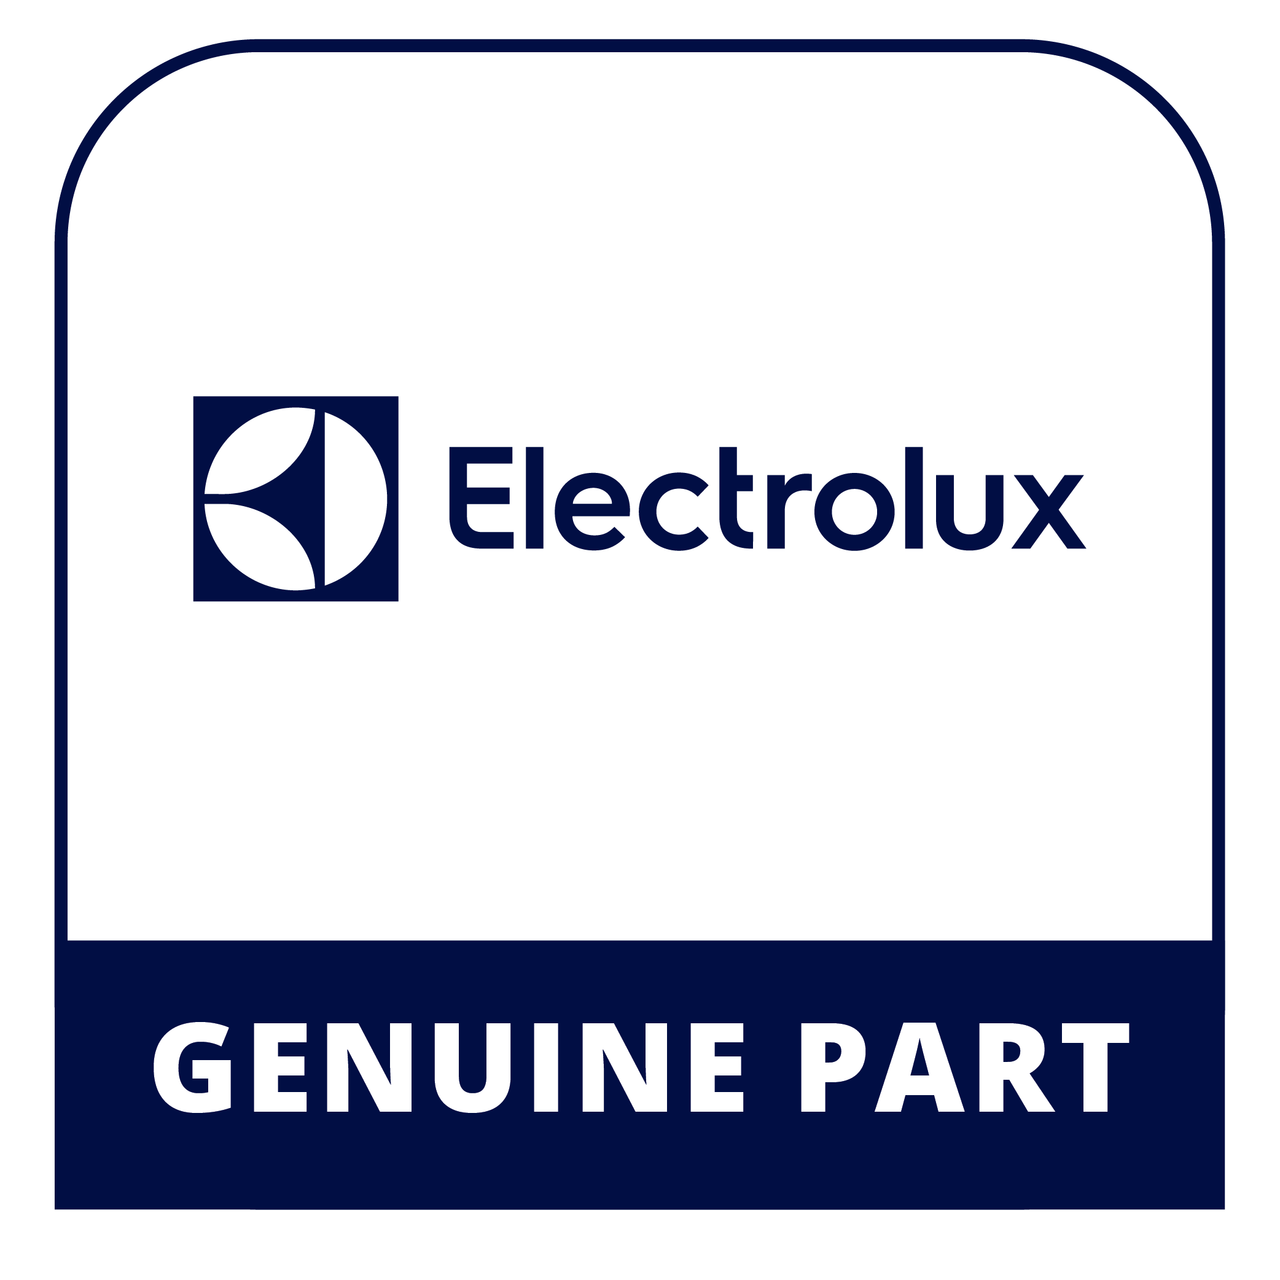 Frigidaire - Electrolux 316483101 Label - Genuine Electrolux Part